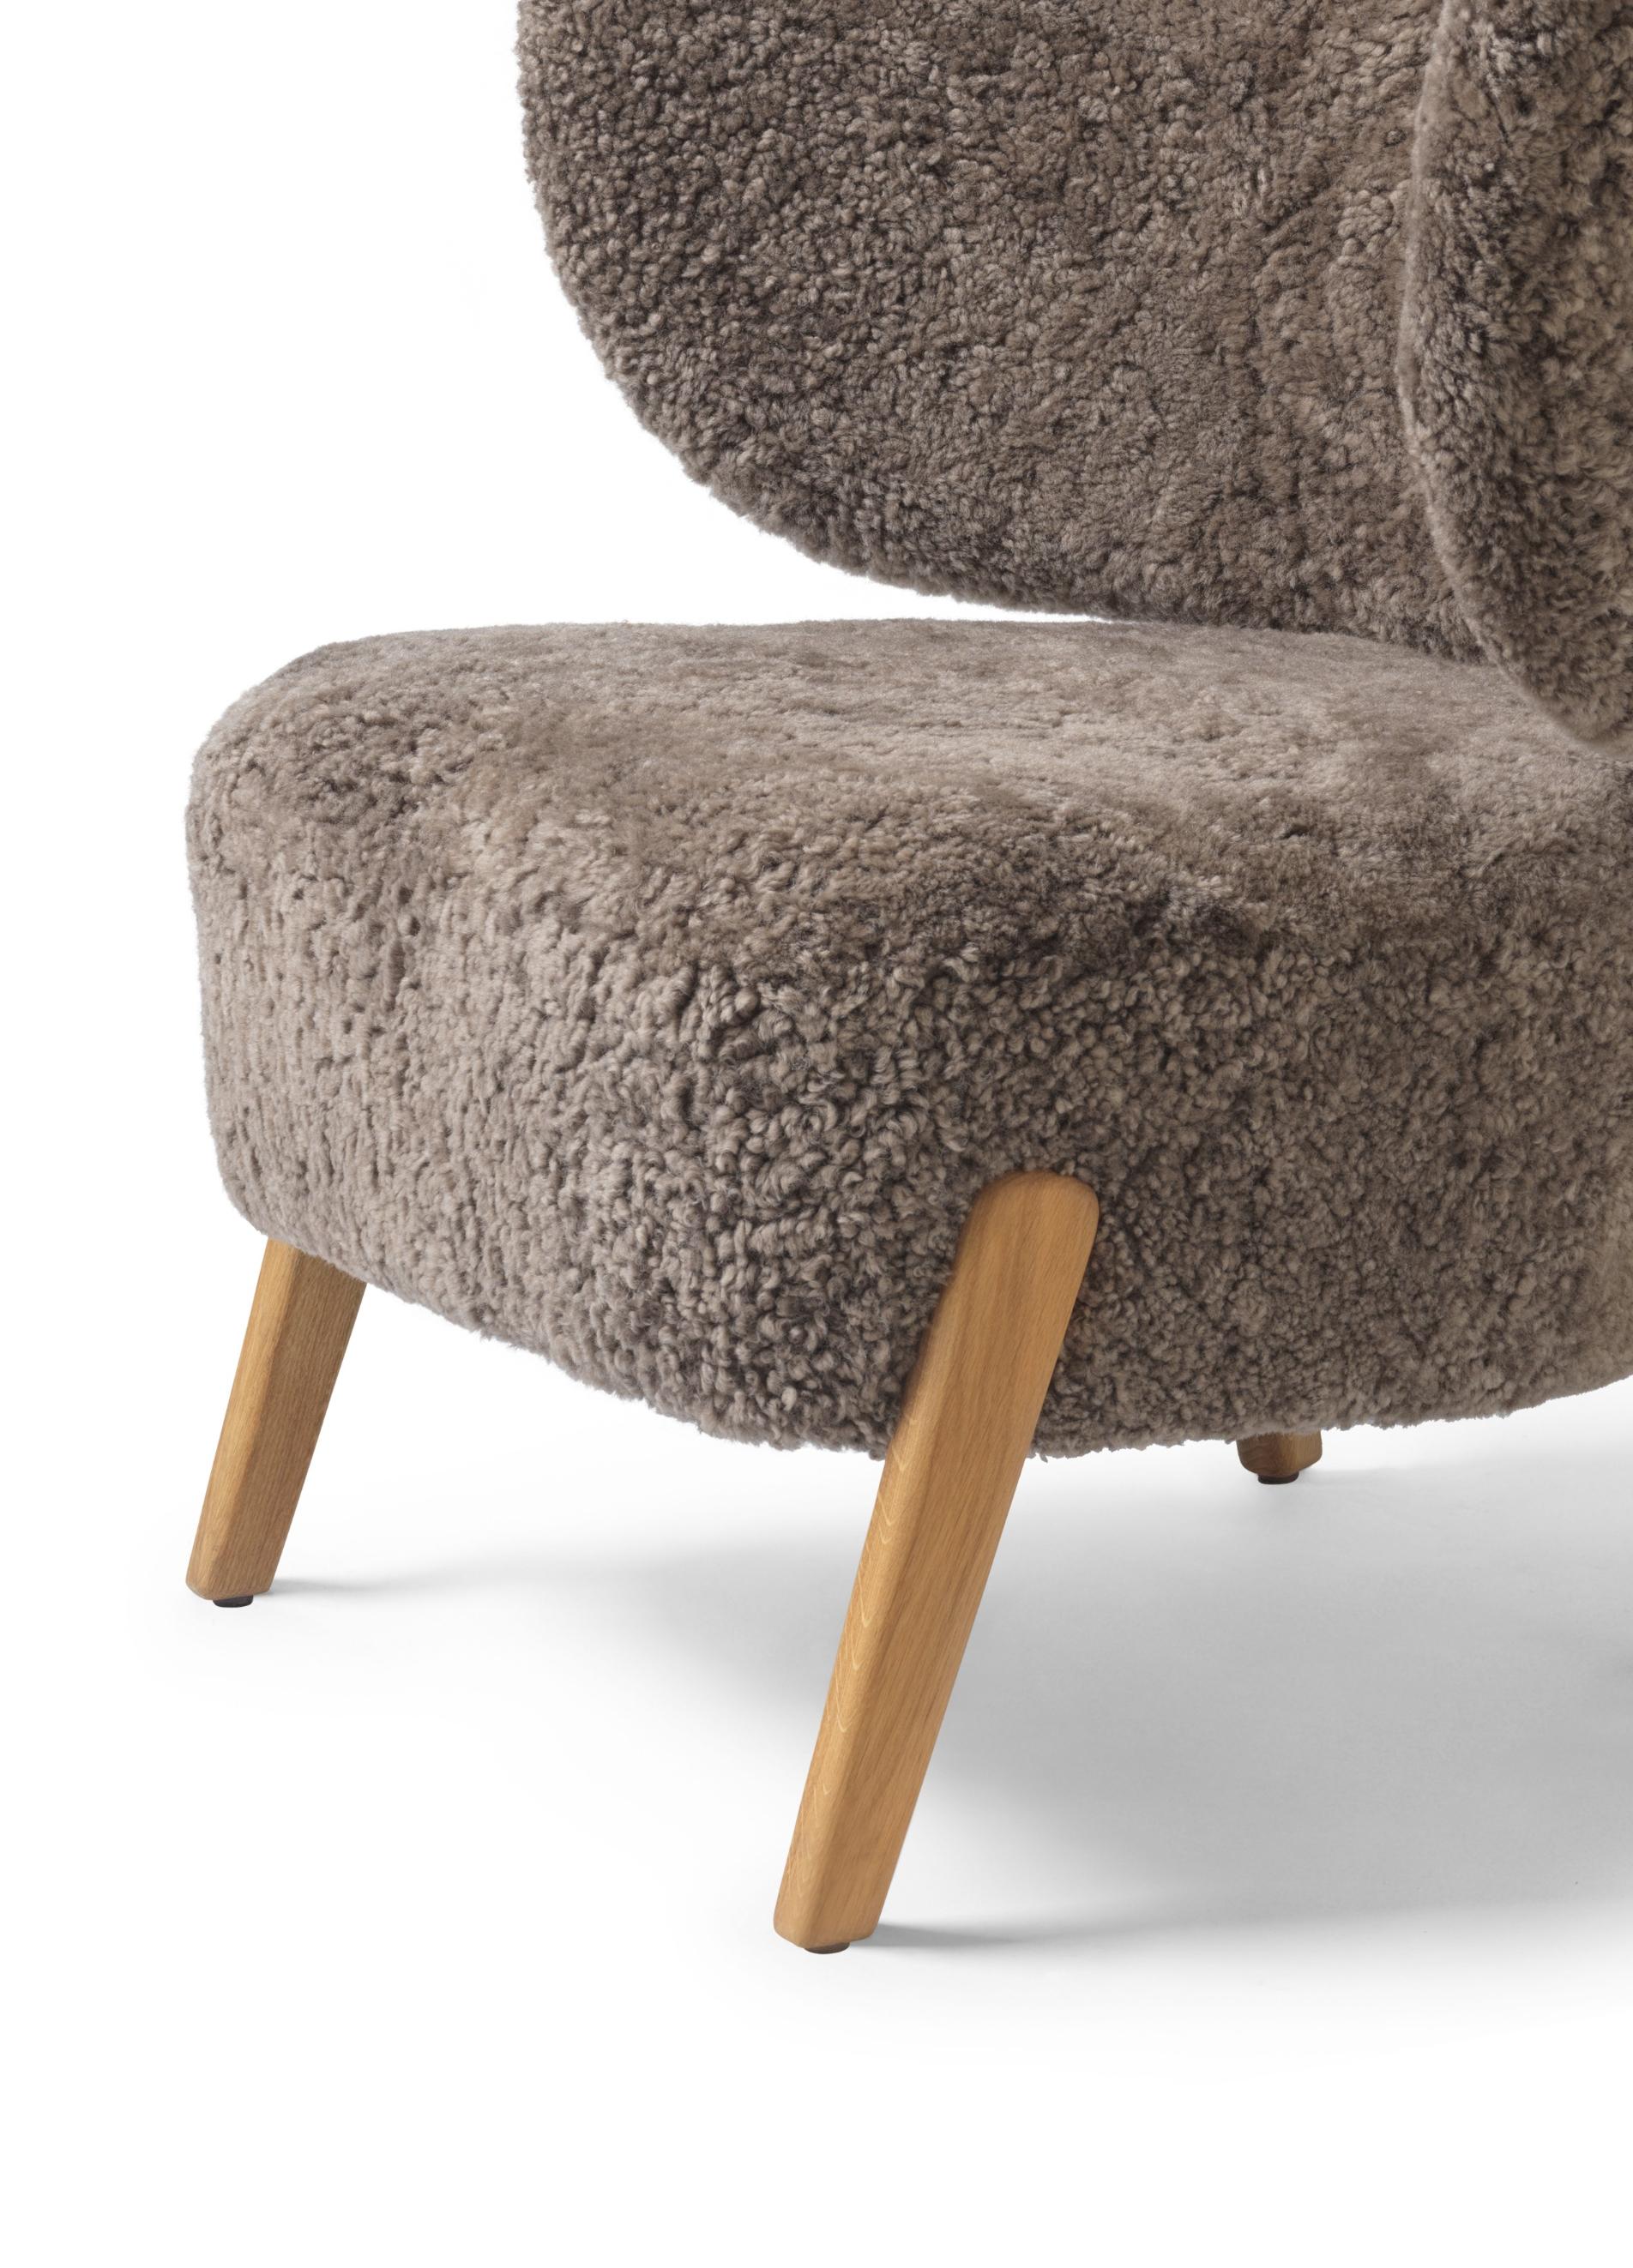 Other Sahara Sheepskin TMBO Lounge Chair by Mazo Design